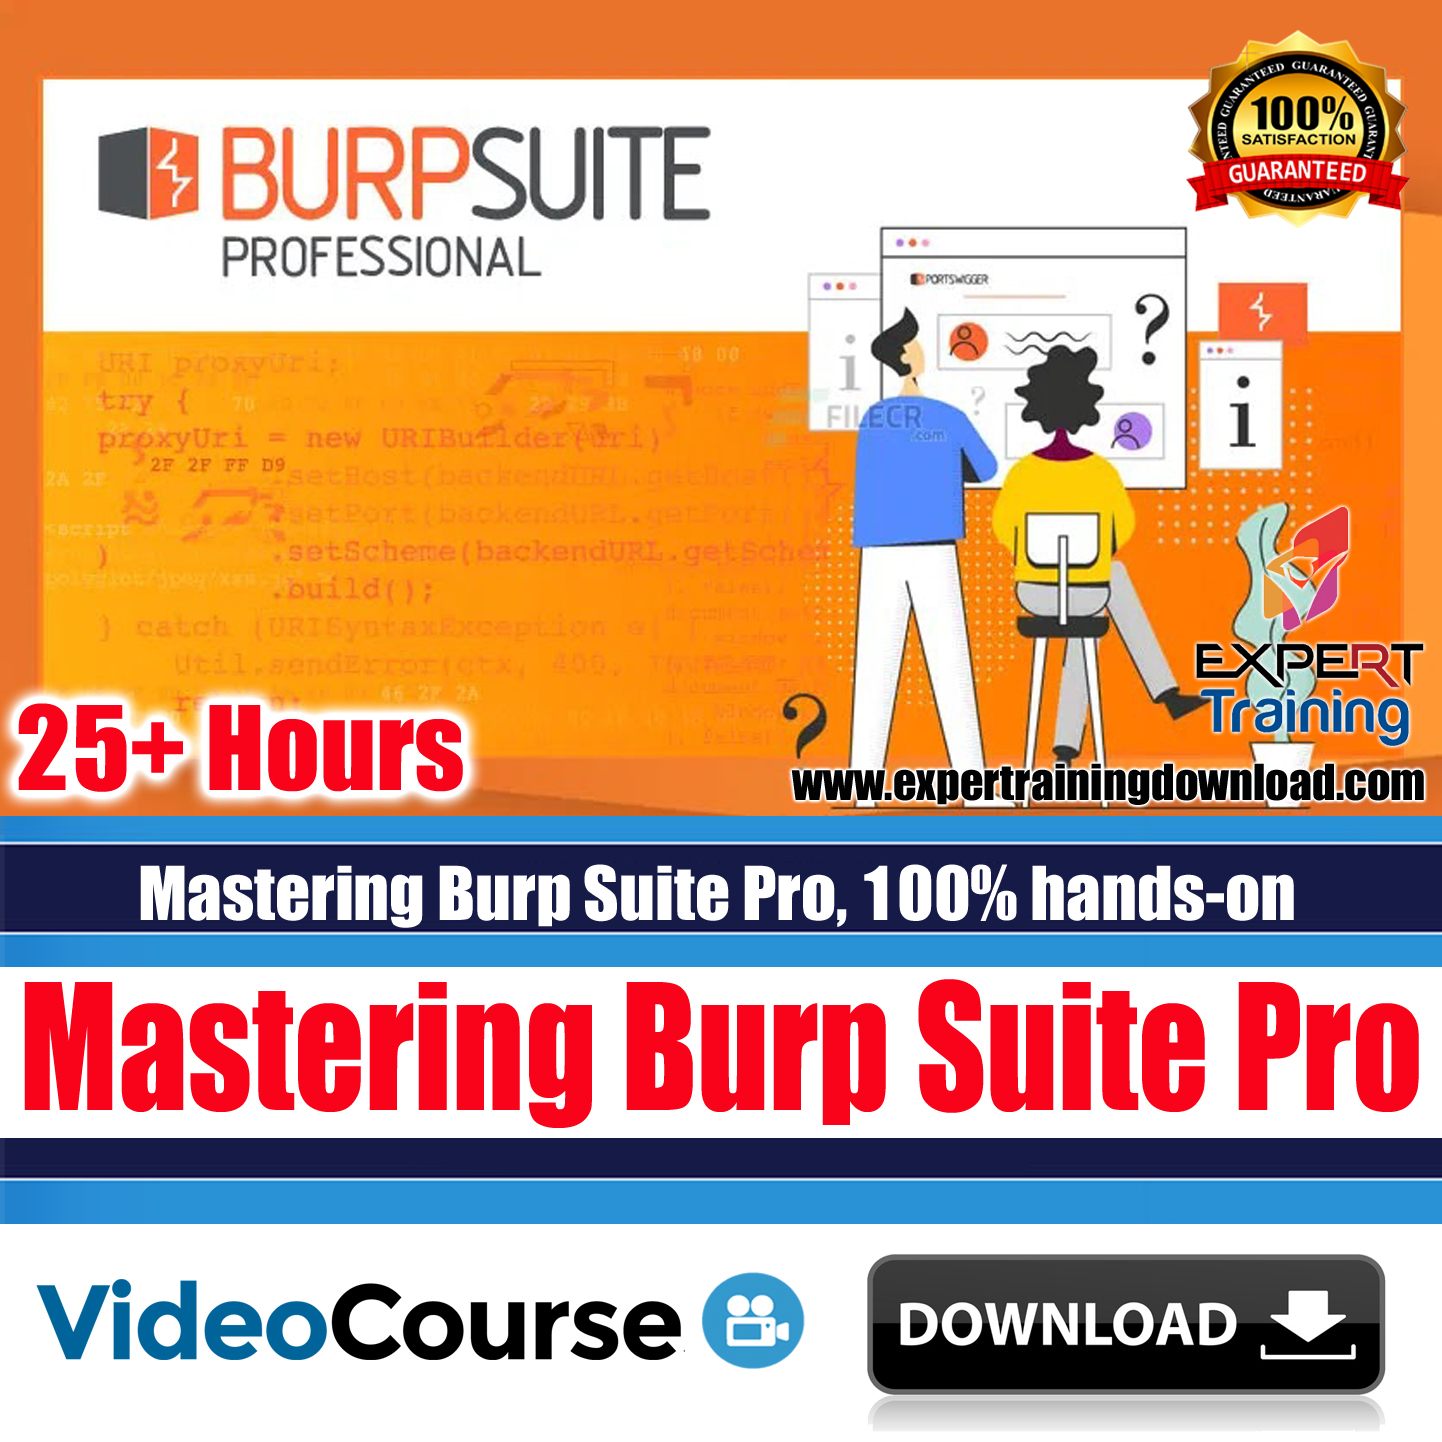 Mastering Burp Suite Pro, 100% hands-on